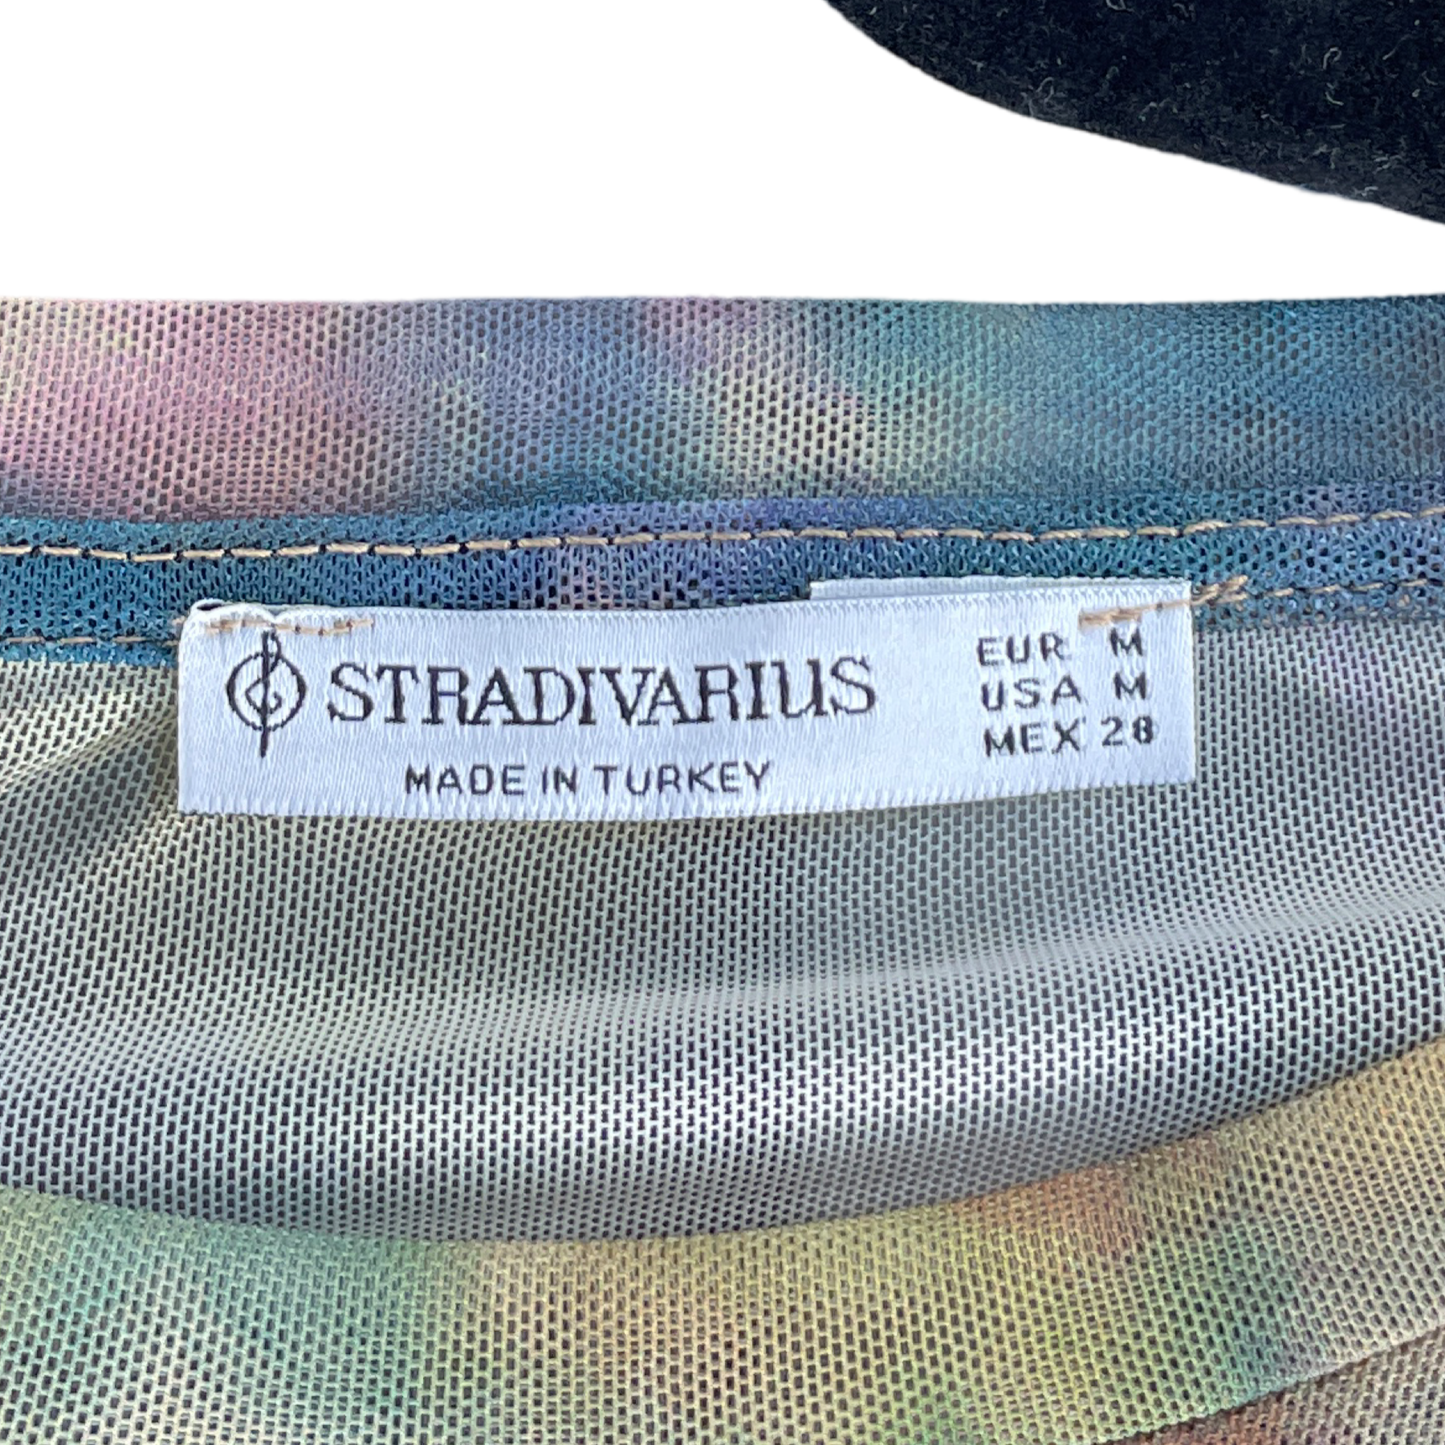 Blusa Stradivarius Ceñida Transparente Tie Dye Verde-
Talla M